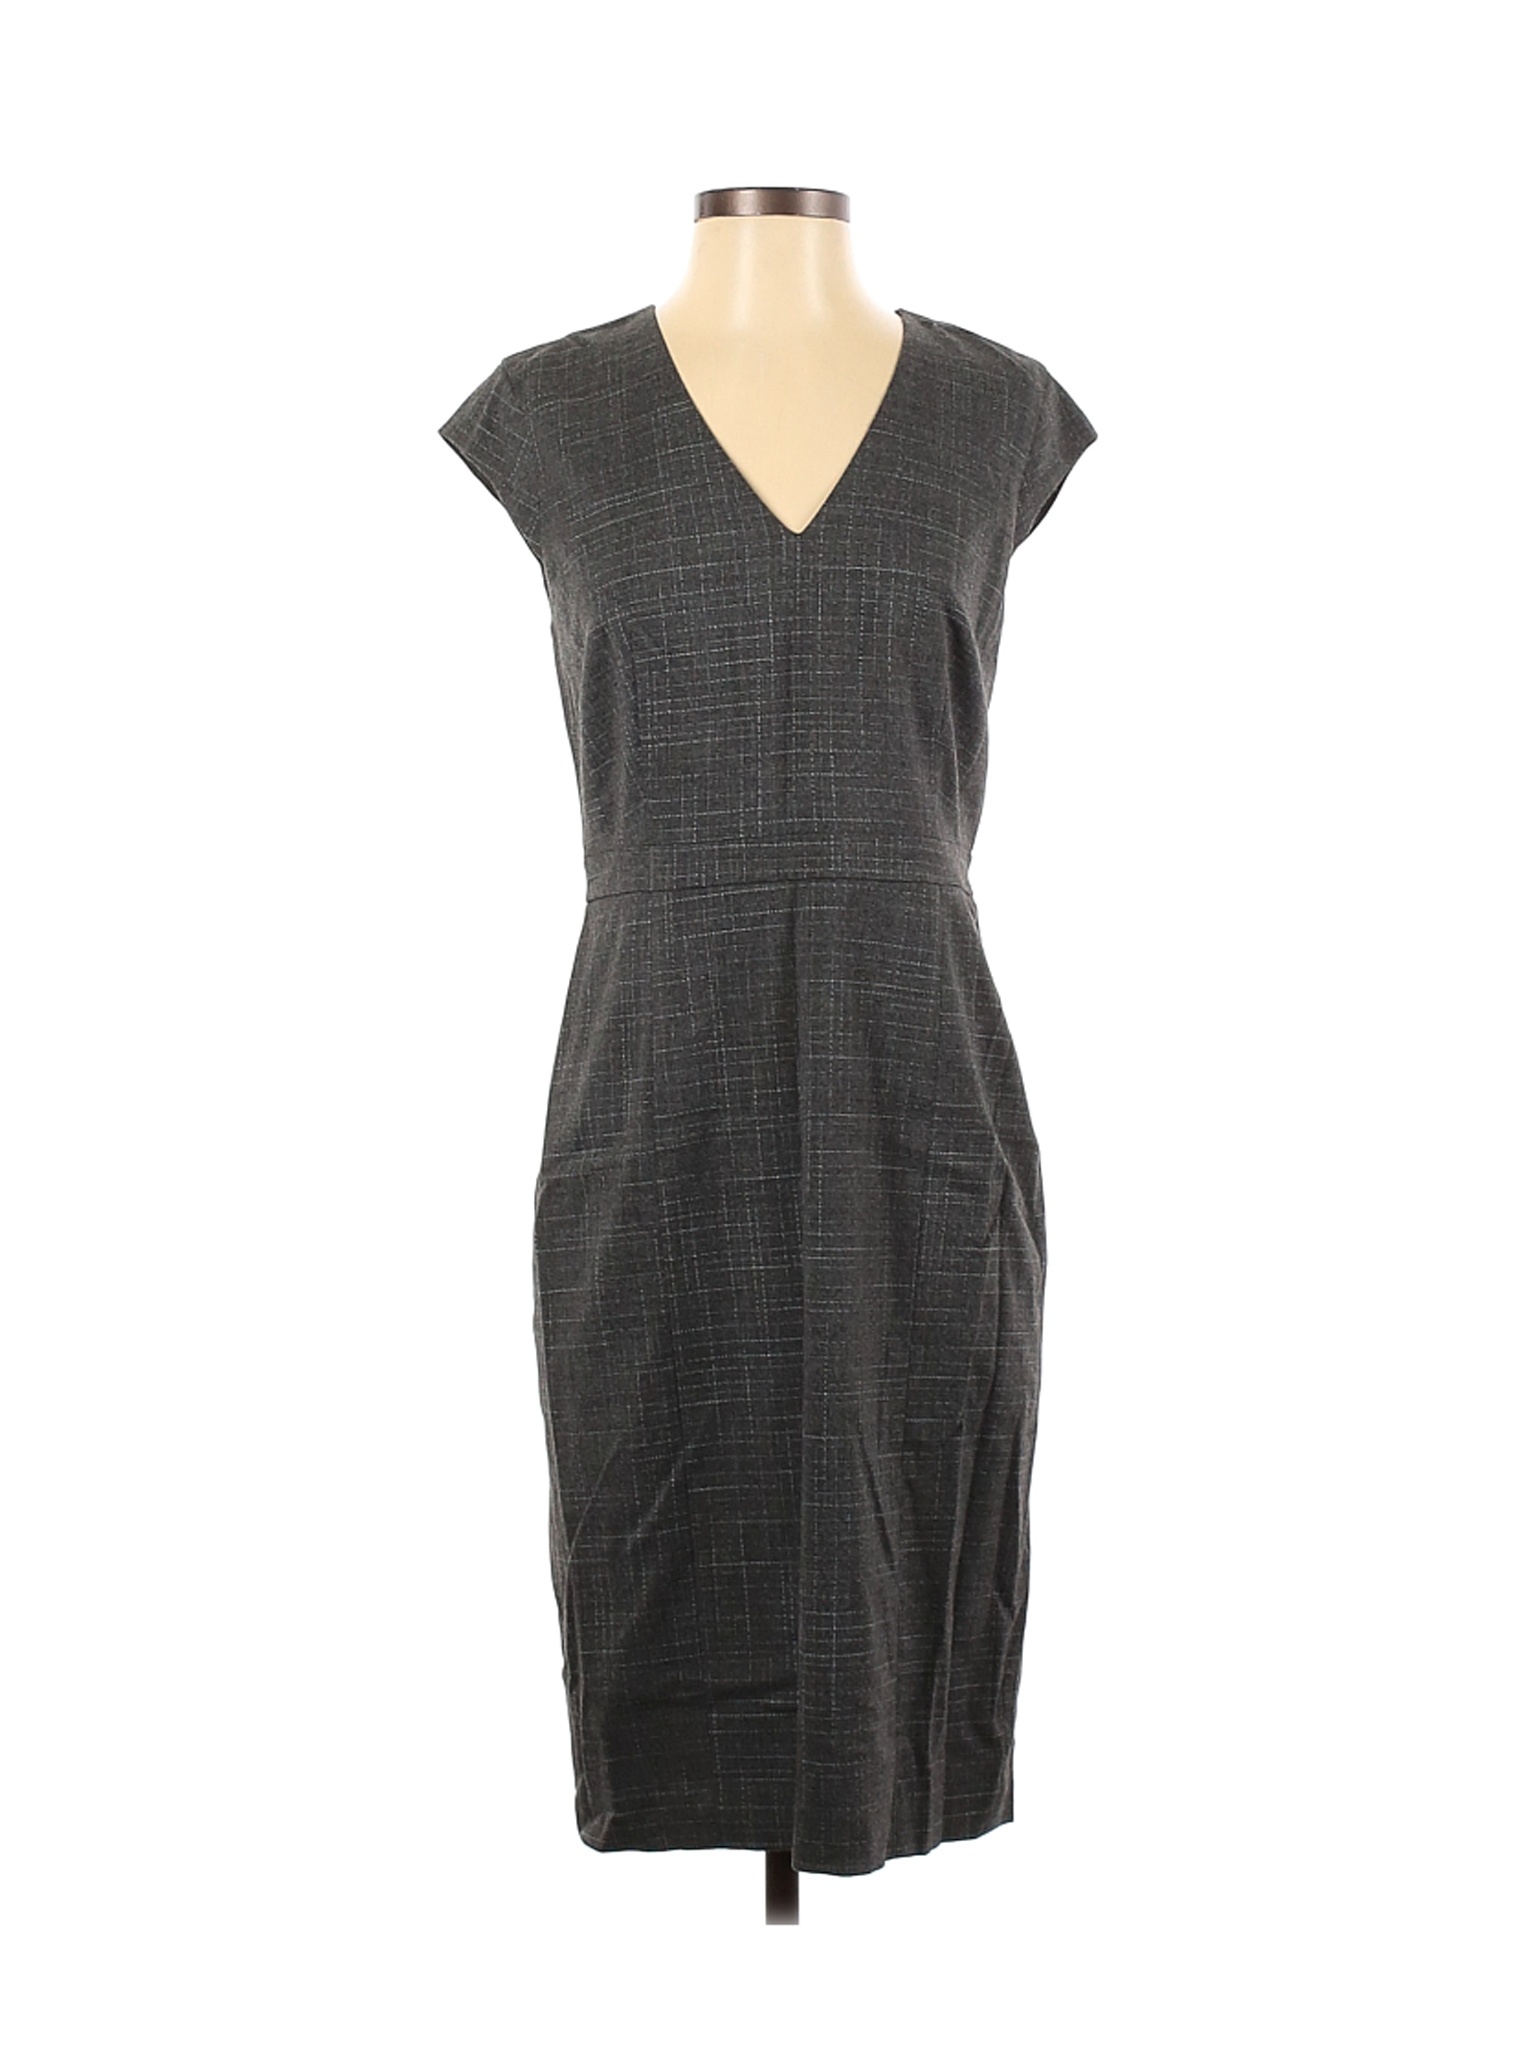 NWT Ann Taylor Women Gray Casual Dress 4 | eBay